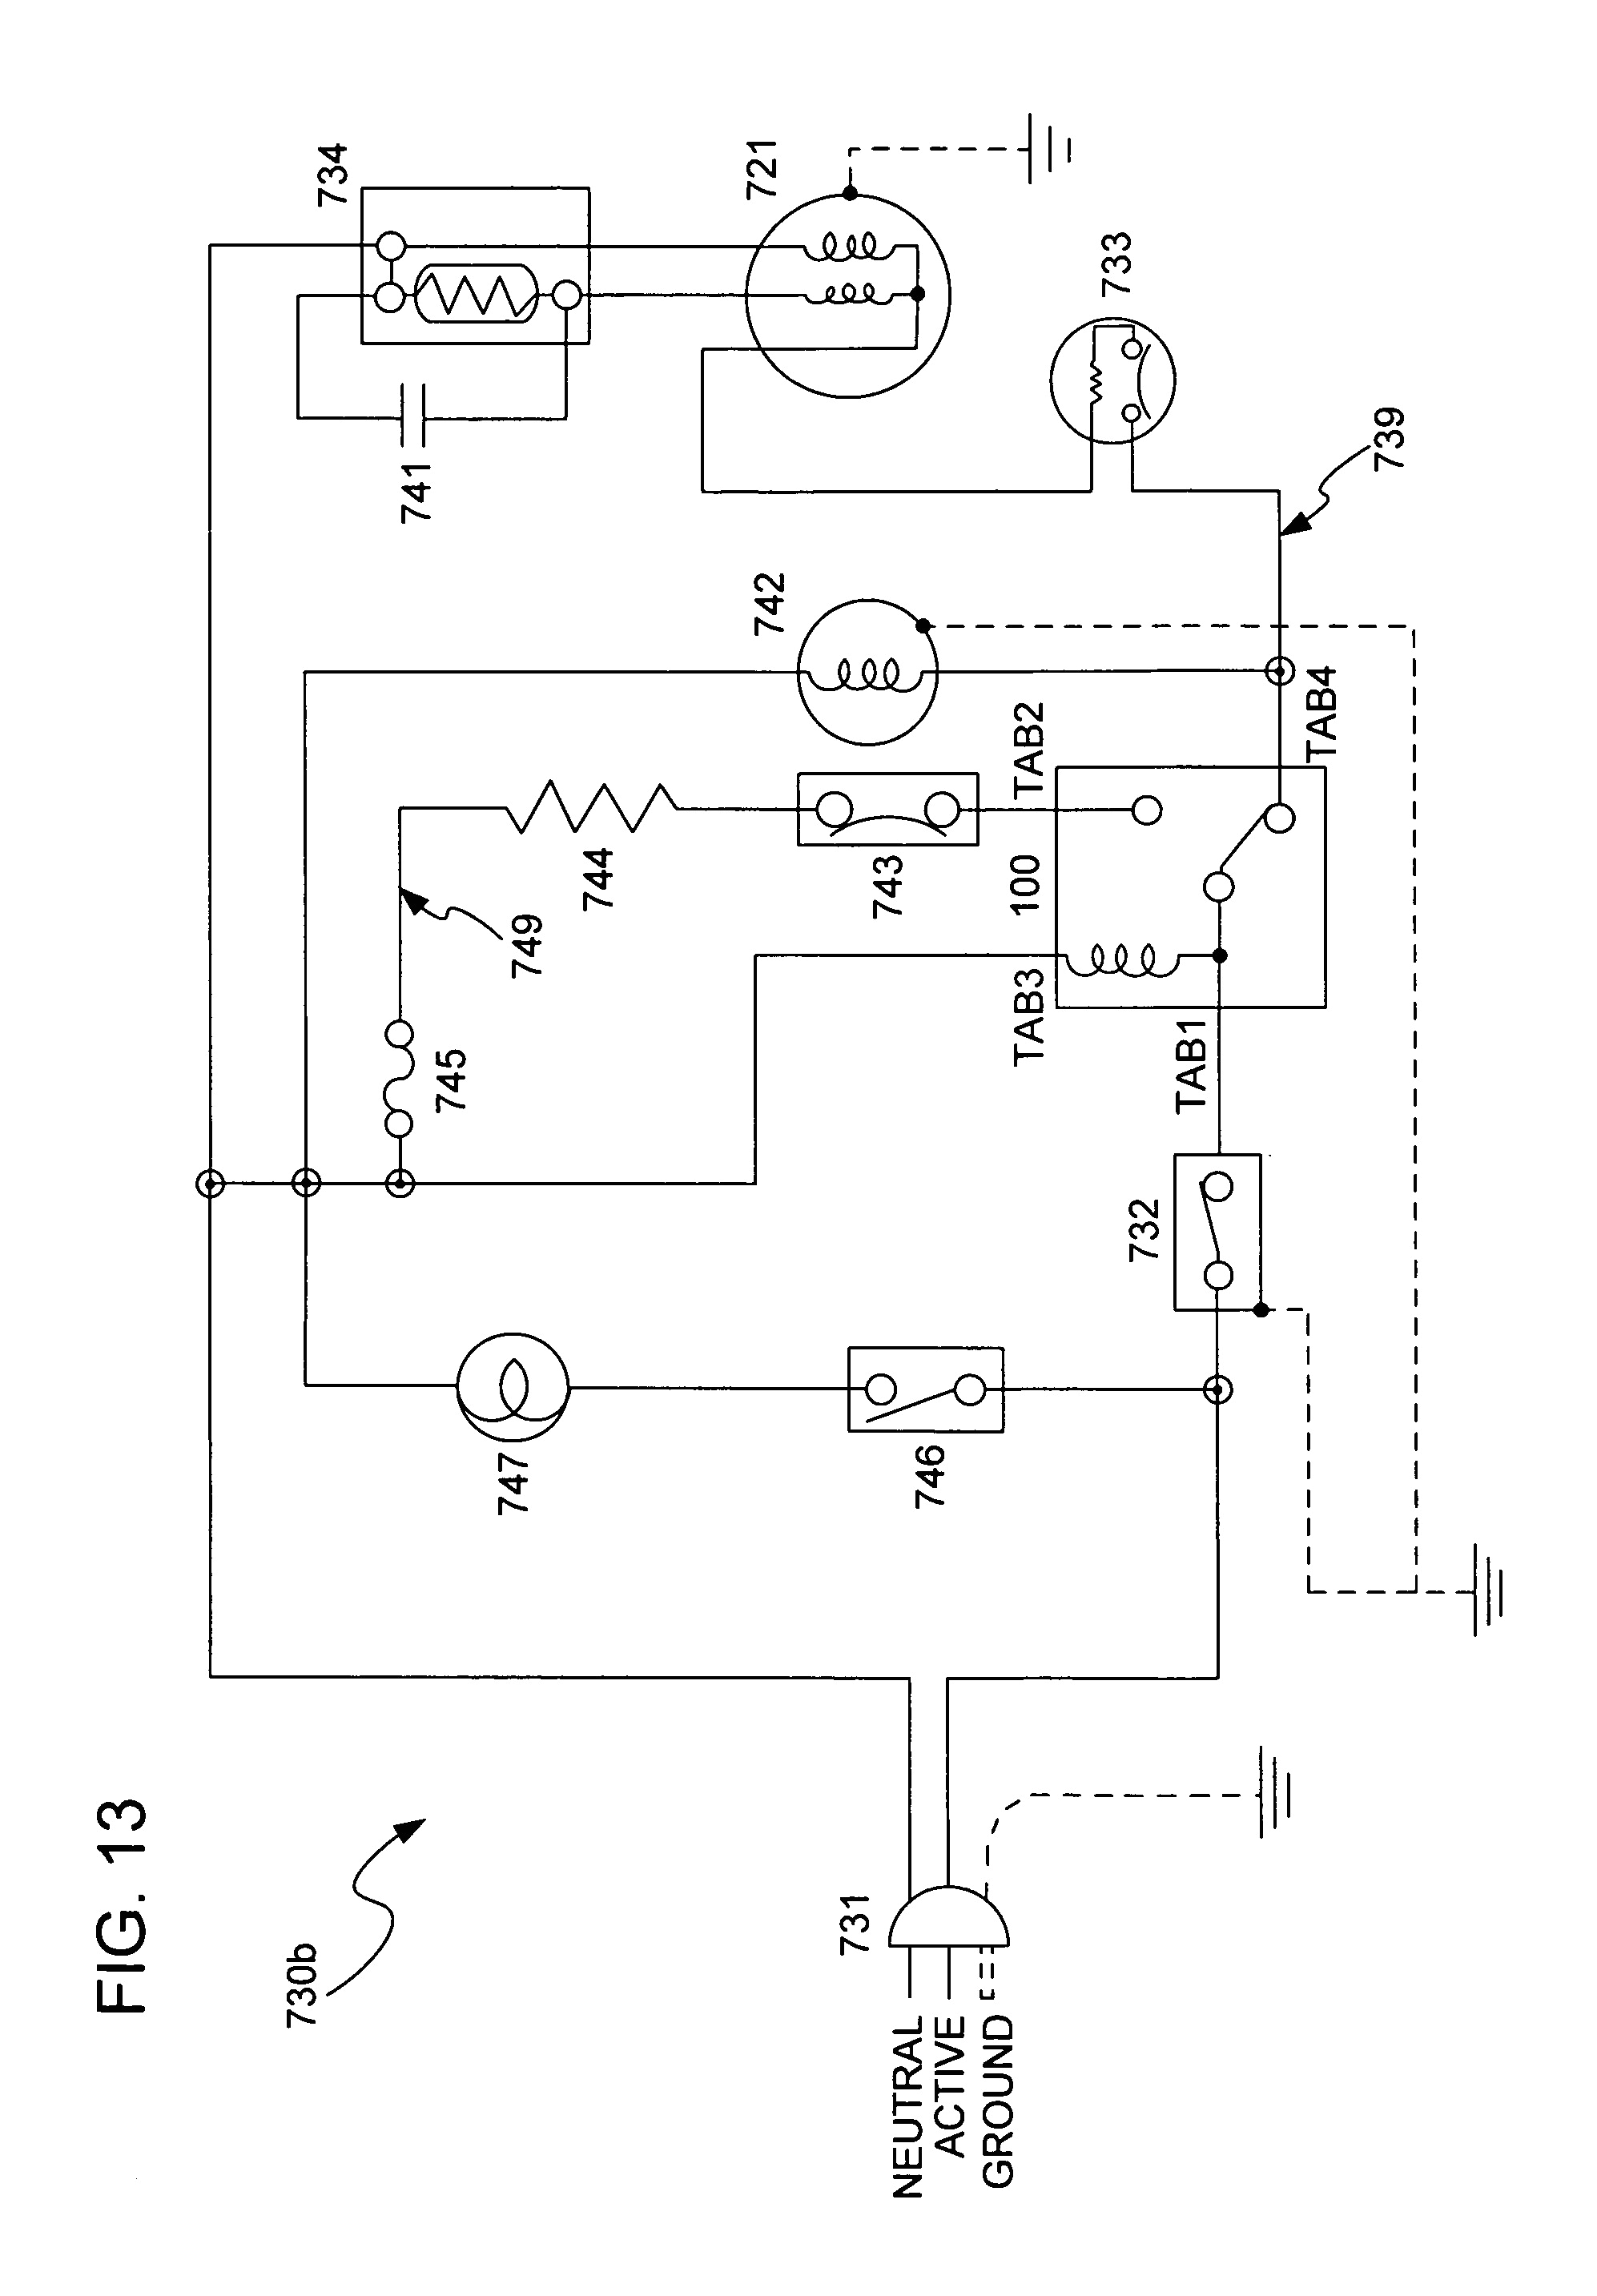 paragon 8141 wiring diagram inspirational defrost clock wiring diagram and freezer timer to paragon 8145 20